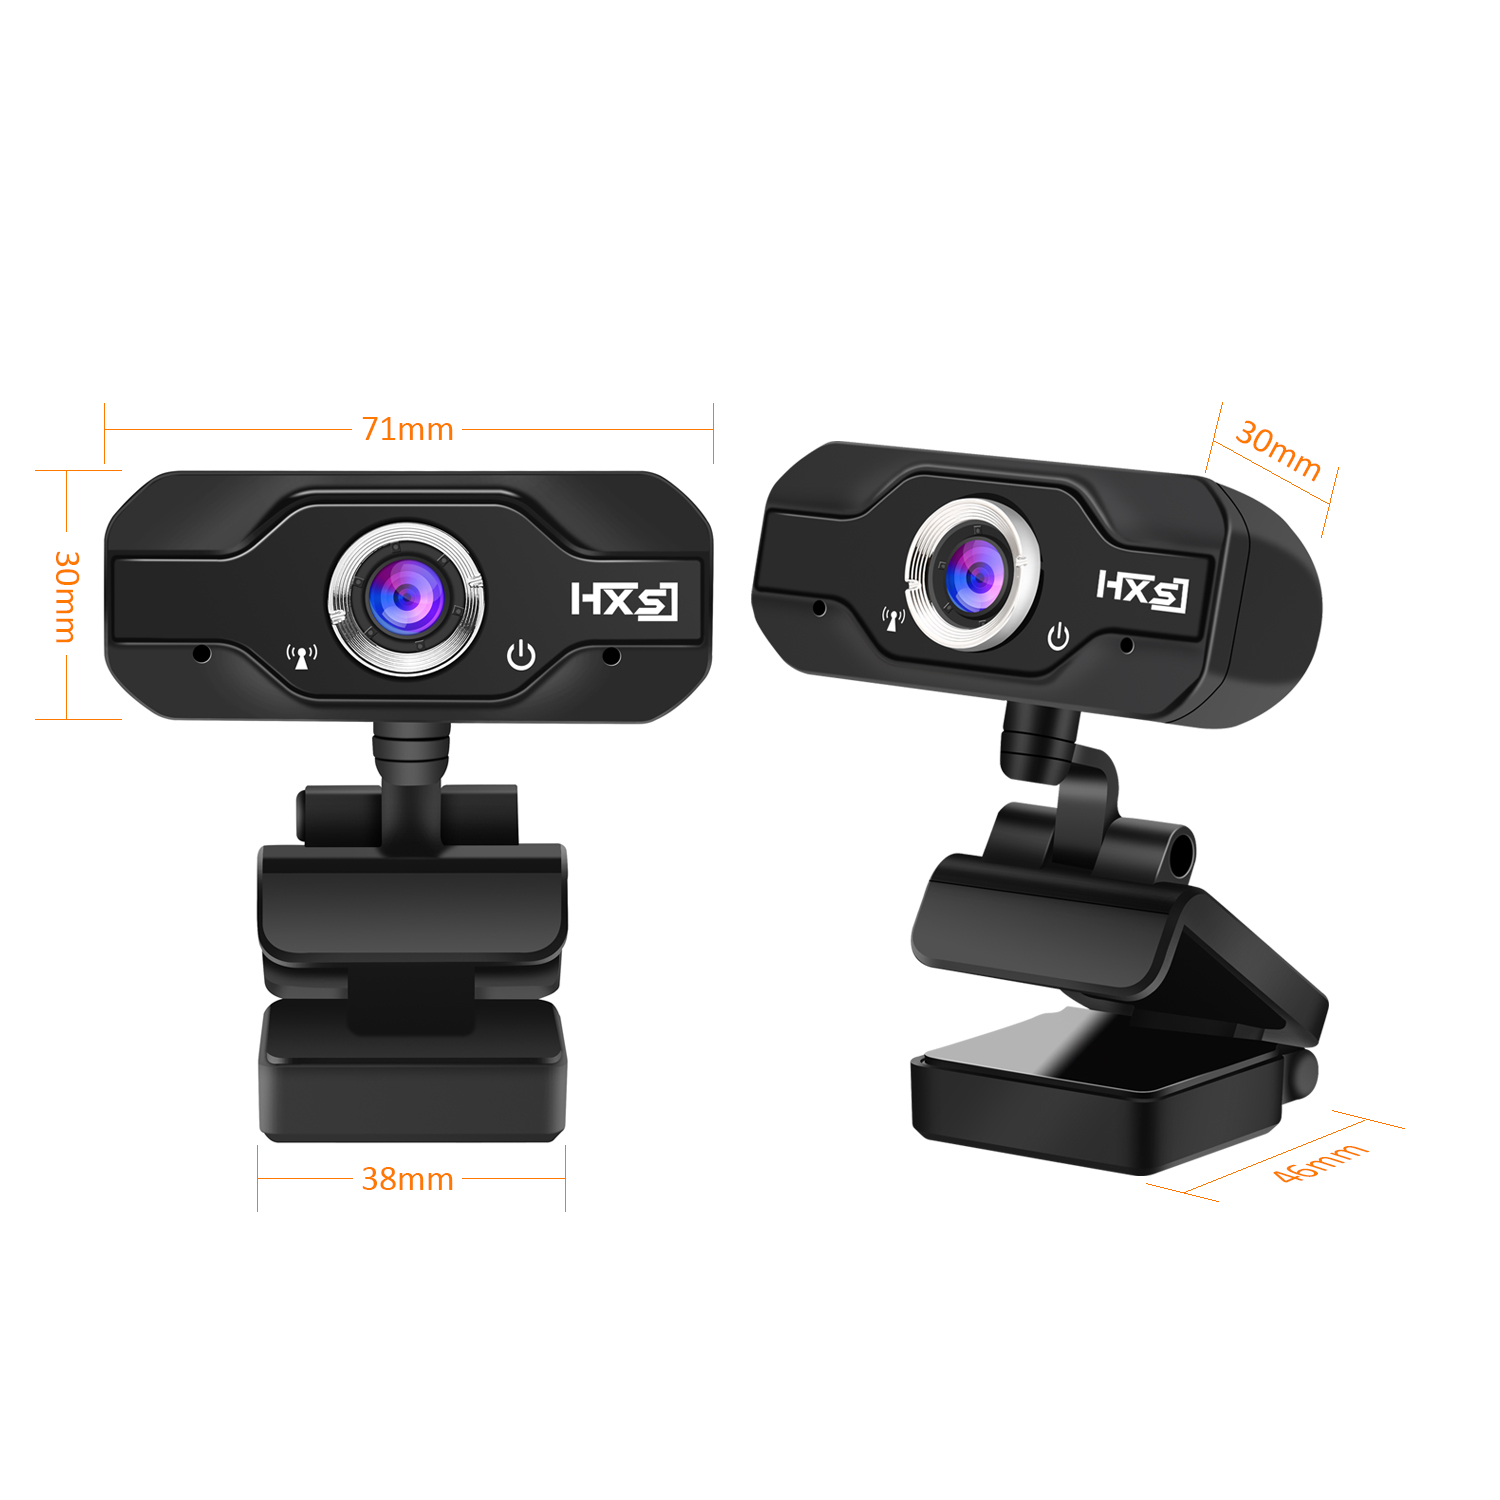 HXSJ HD 720P CMOS Sensor Webcam Built-in Microphone Adjustable Angle for Laptop Desktop 53